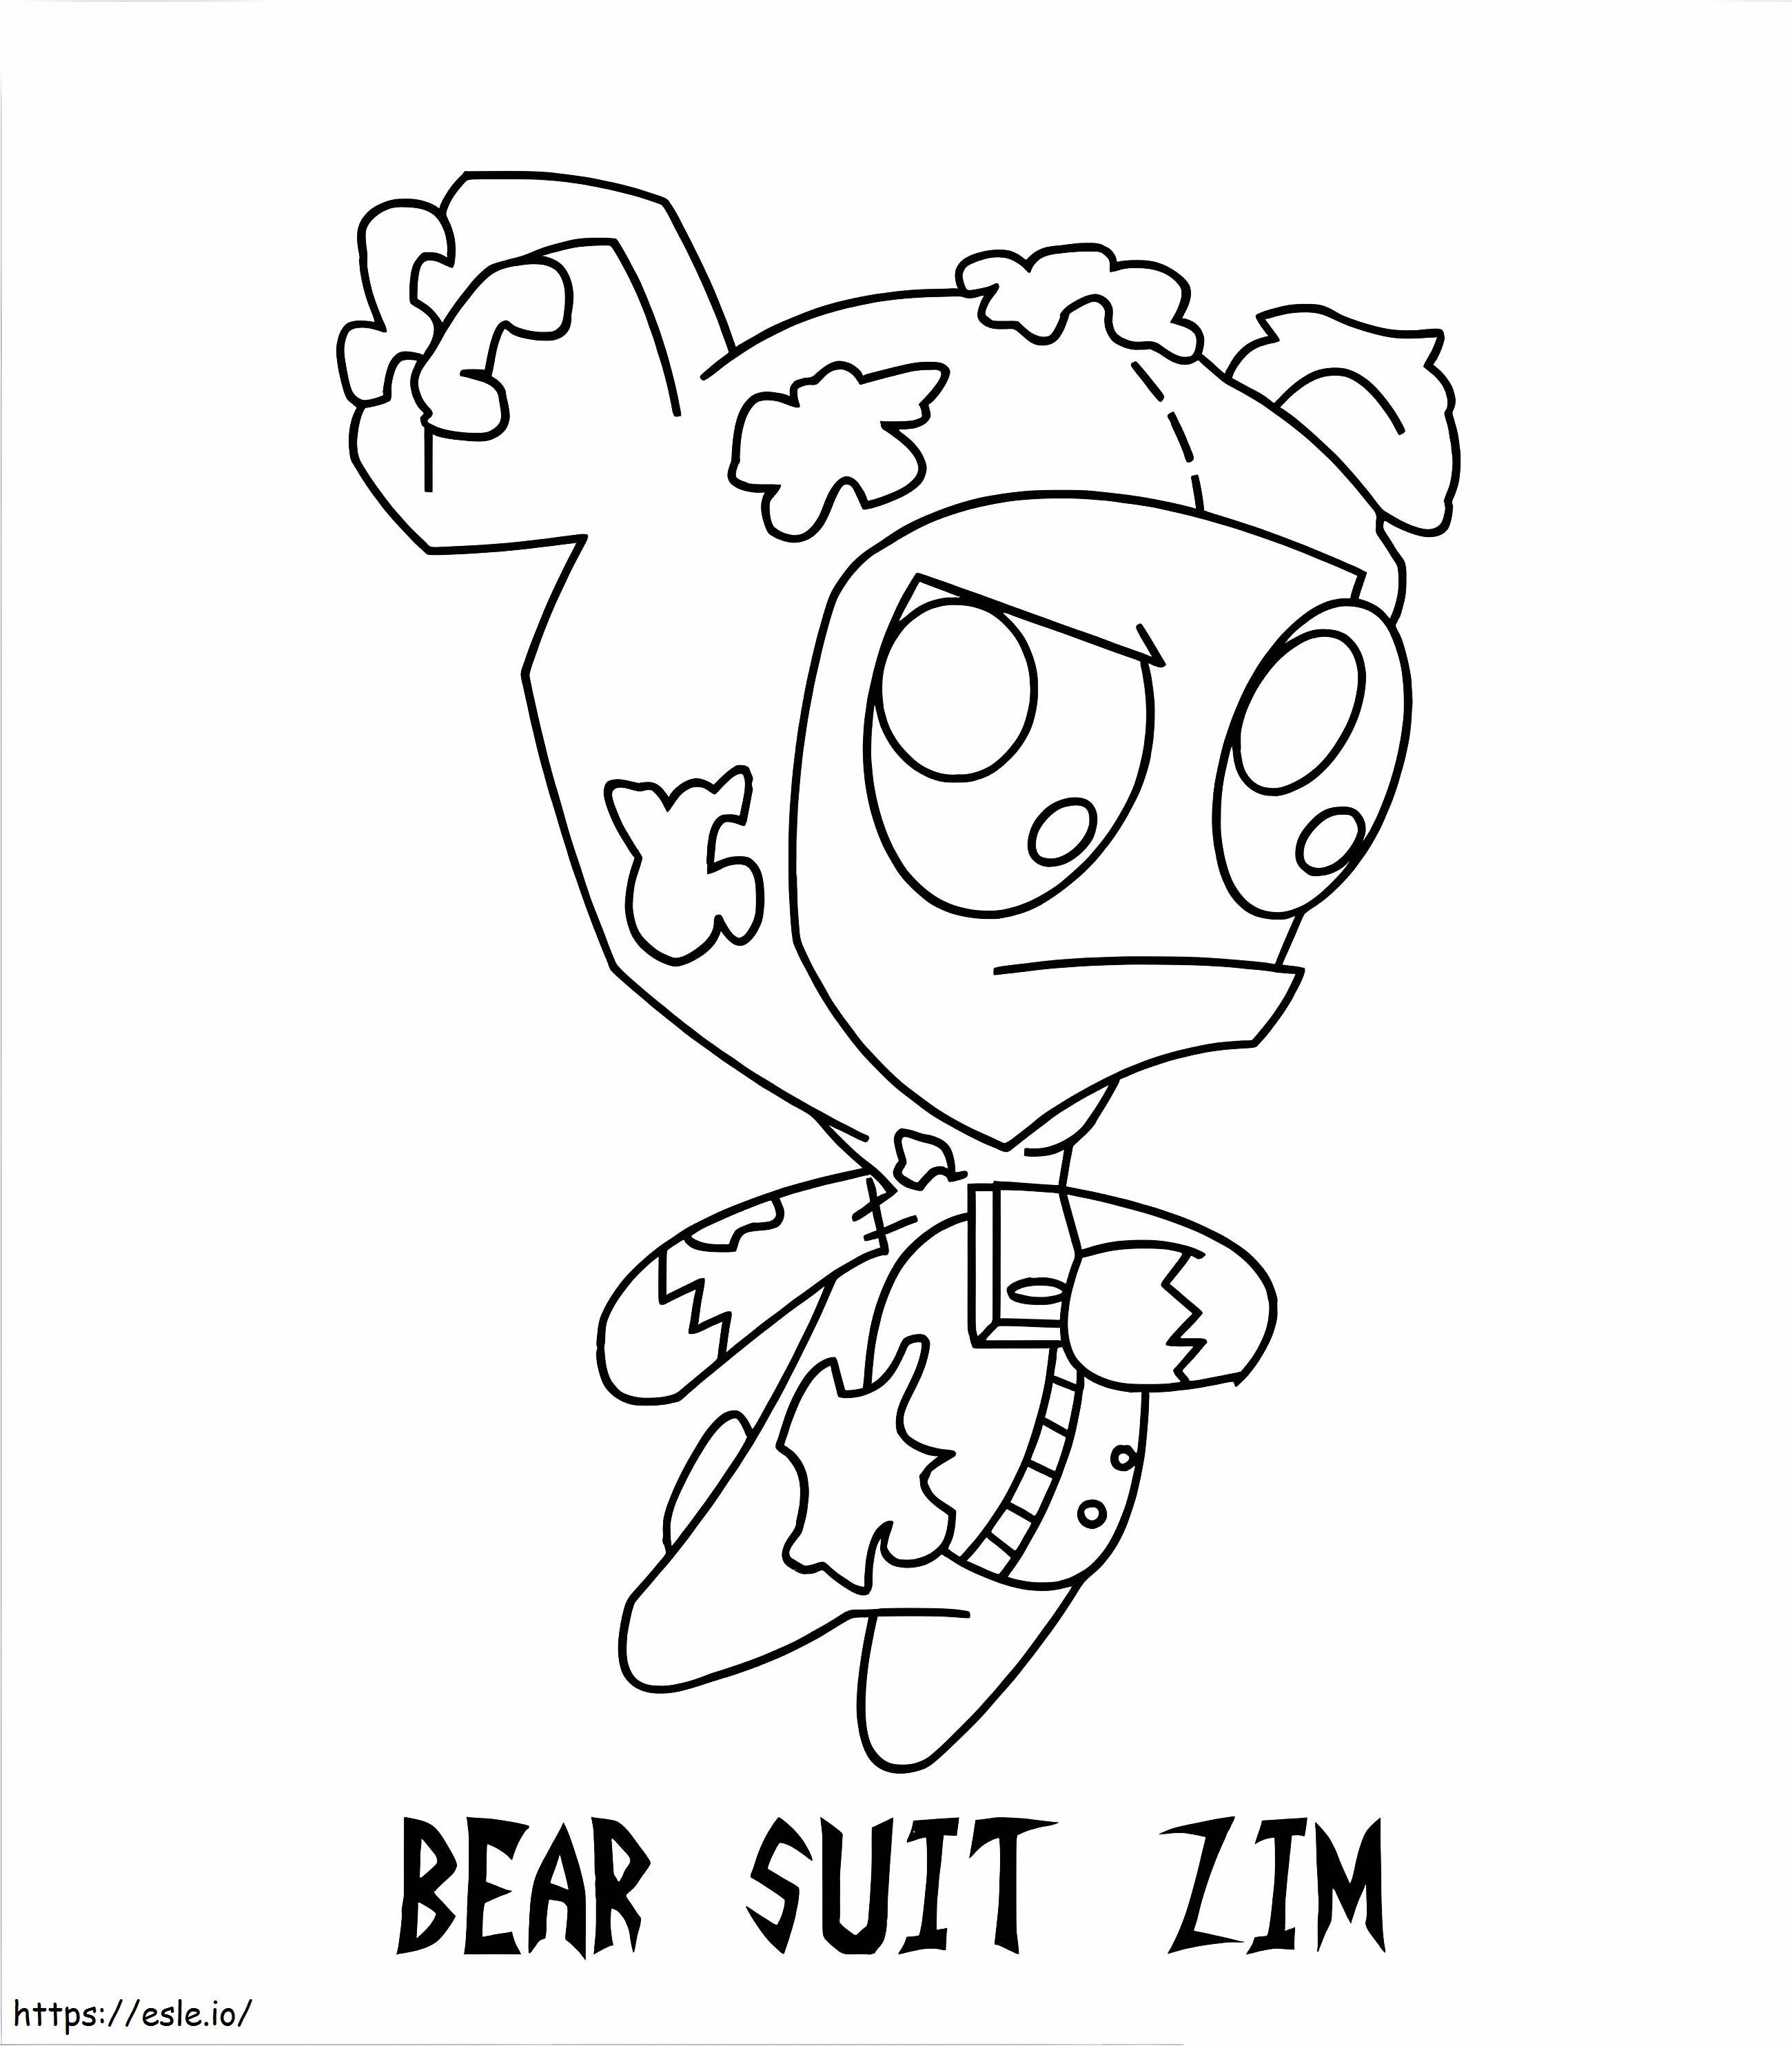 Bear Suit Zim coloring page